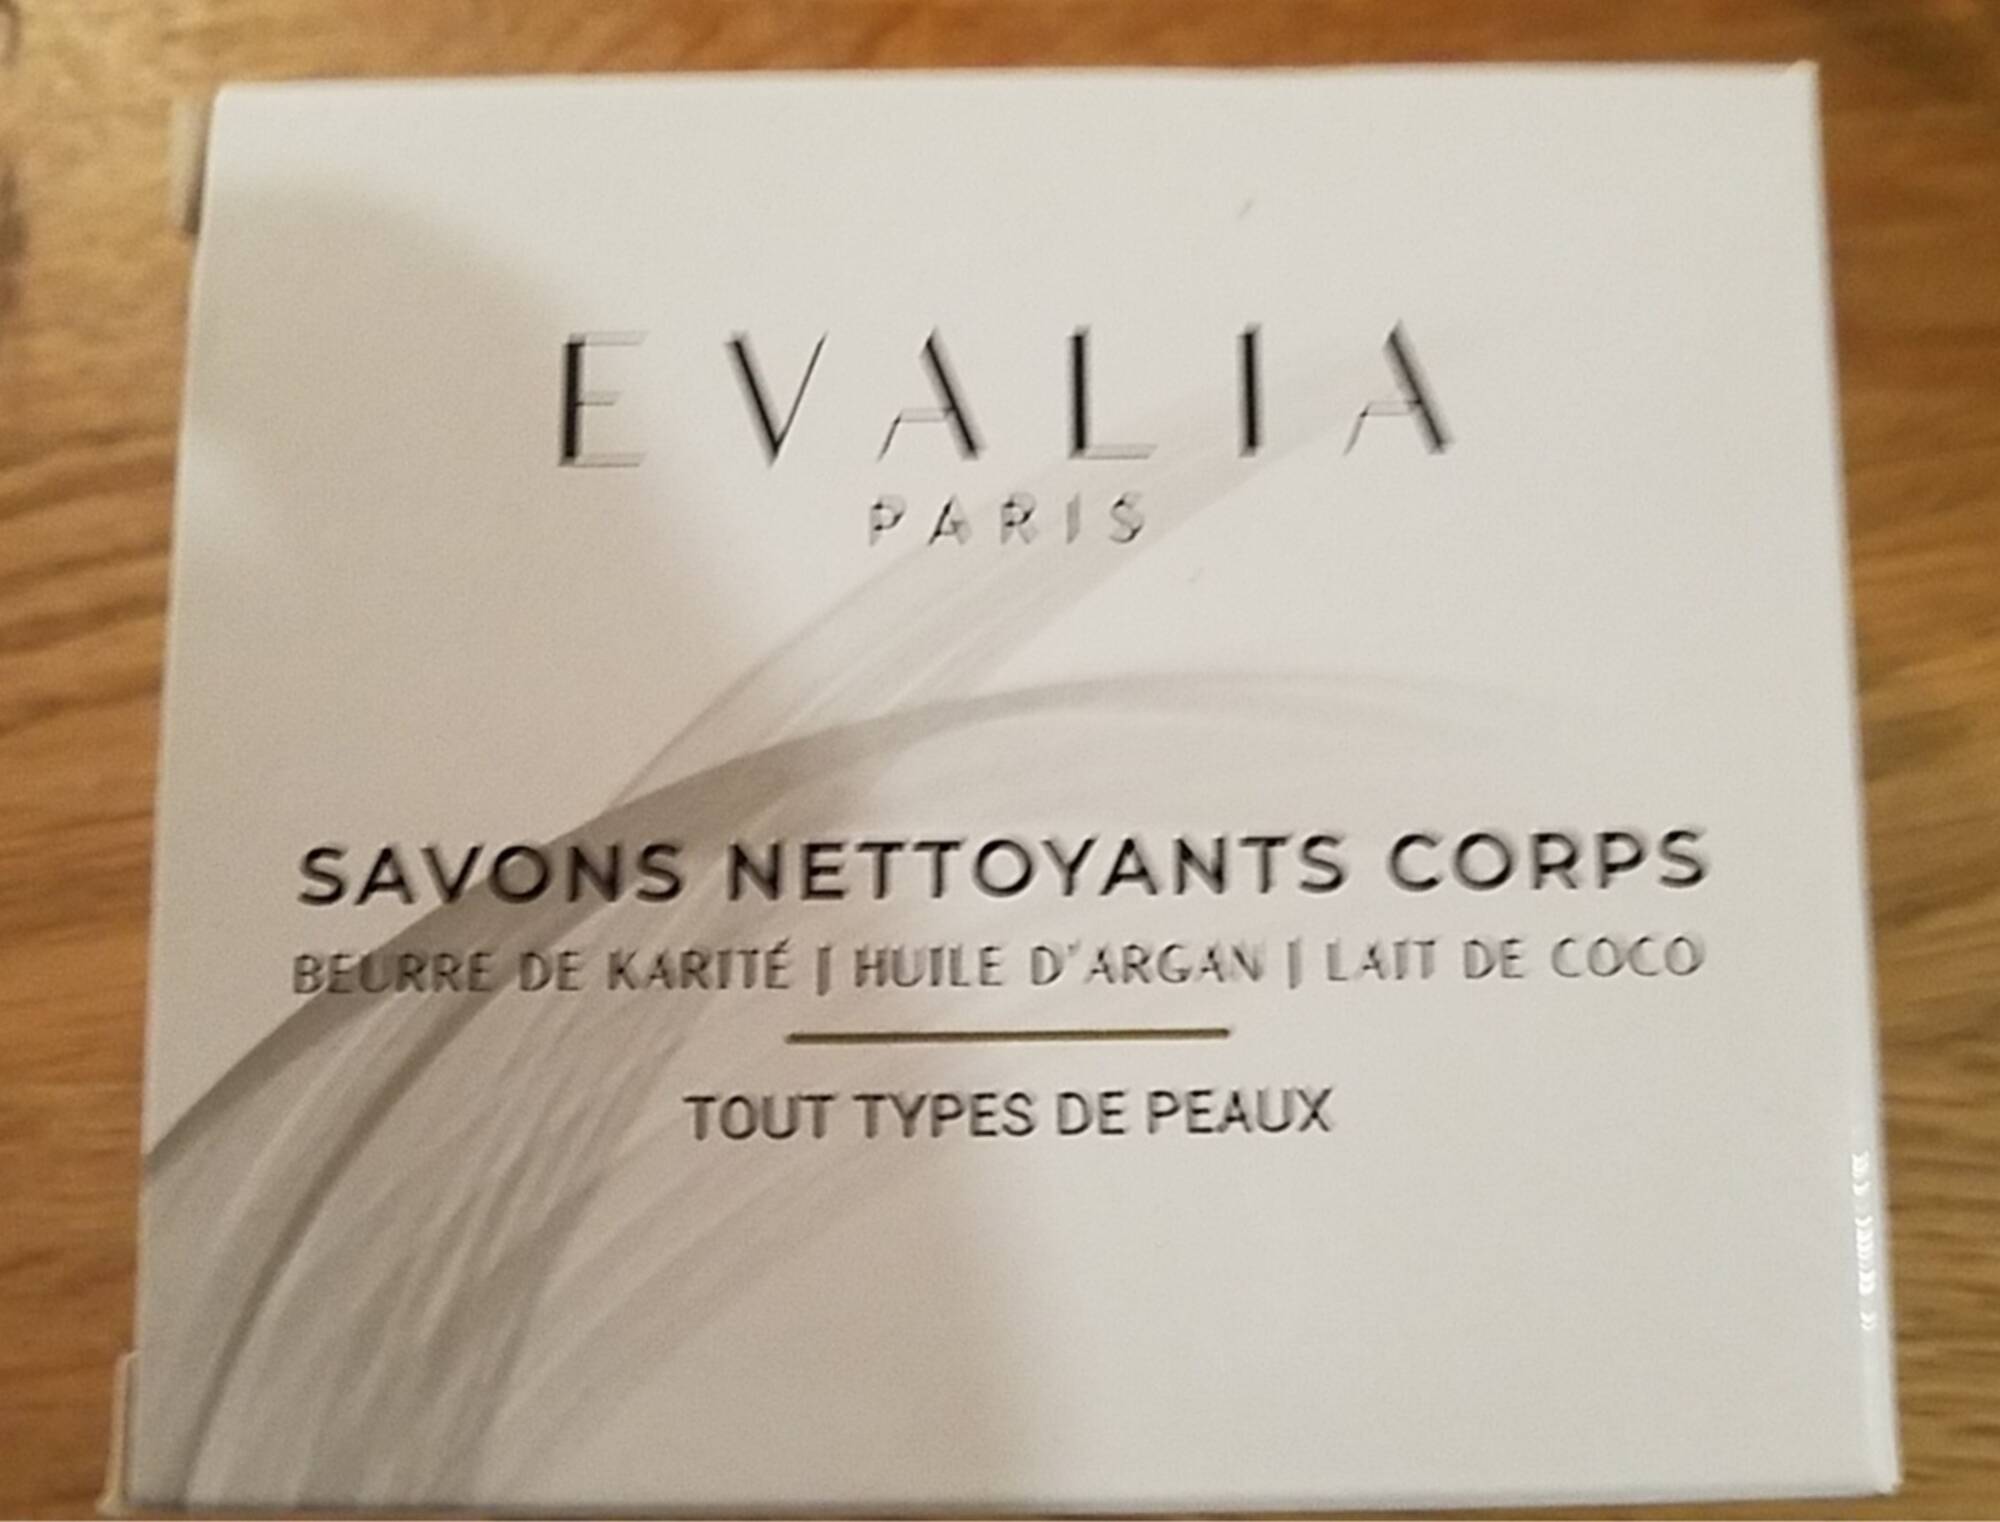 EVALIA PARIS - Savons nettoyants corps